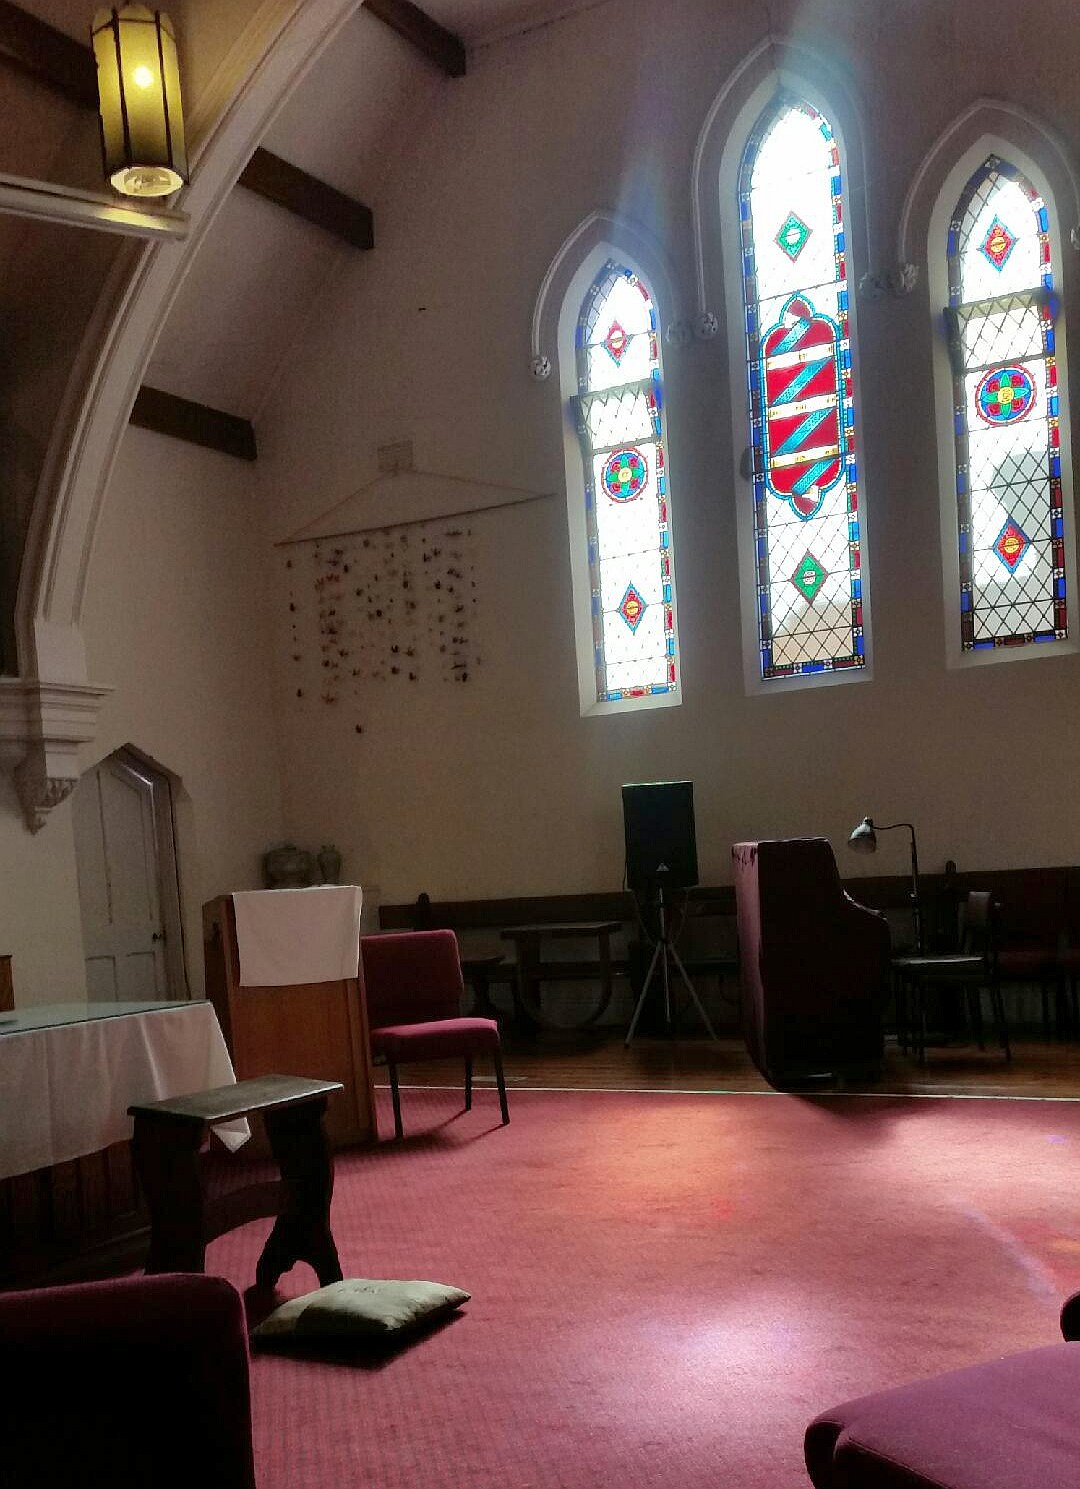 St Kilda Uniting Church Open Church on Tuesdays